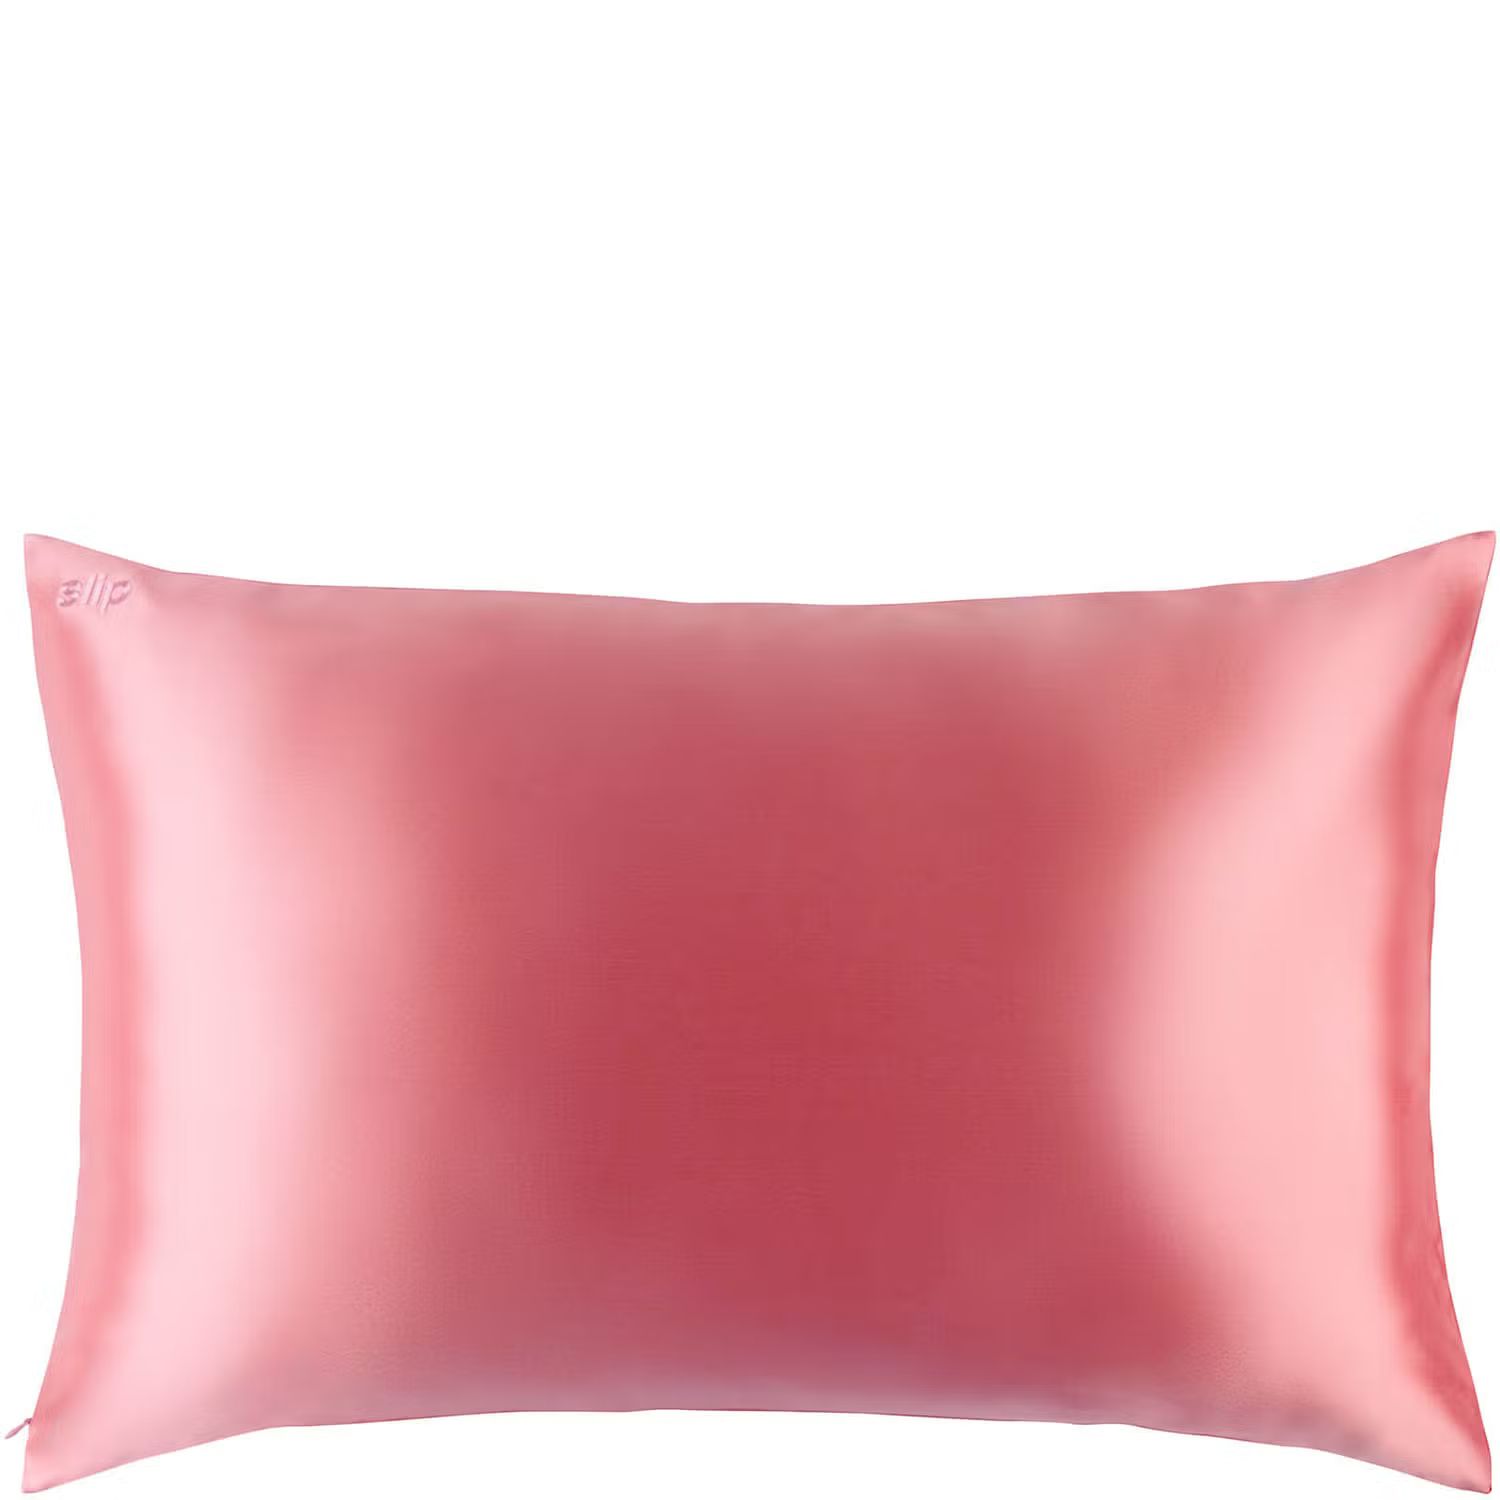 Slip Pure Silk Queen Pillowcase - Blush | Cult Beauty